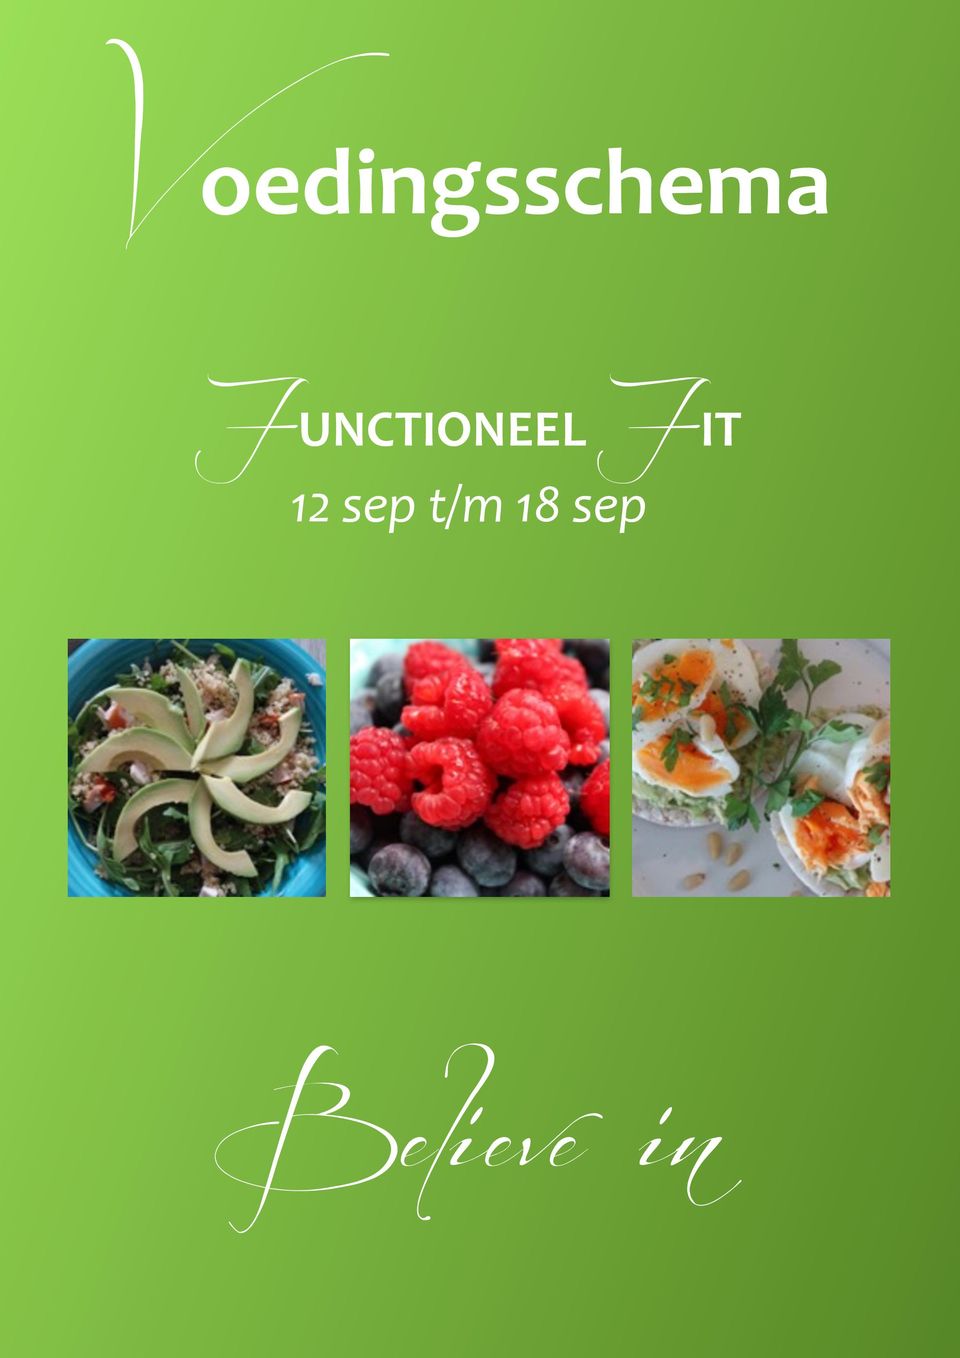 Voedingsschema Believe In 12 Sep T M 18 Sep Functioneel Fit Pdf Free Download